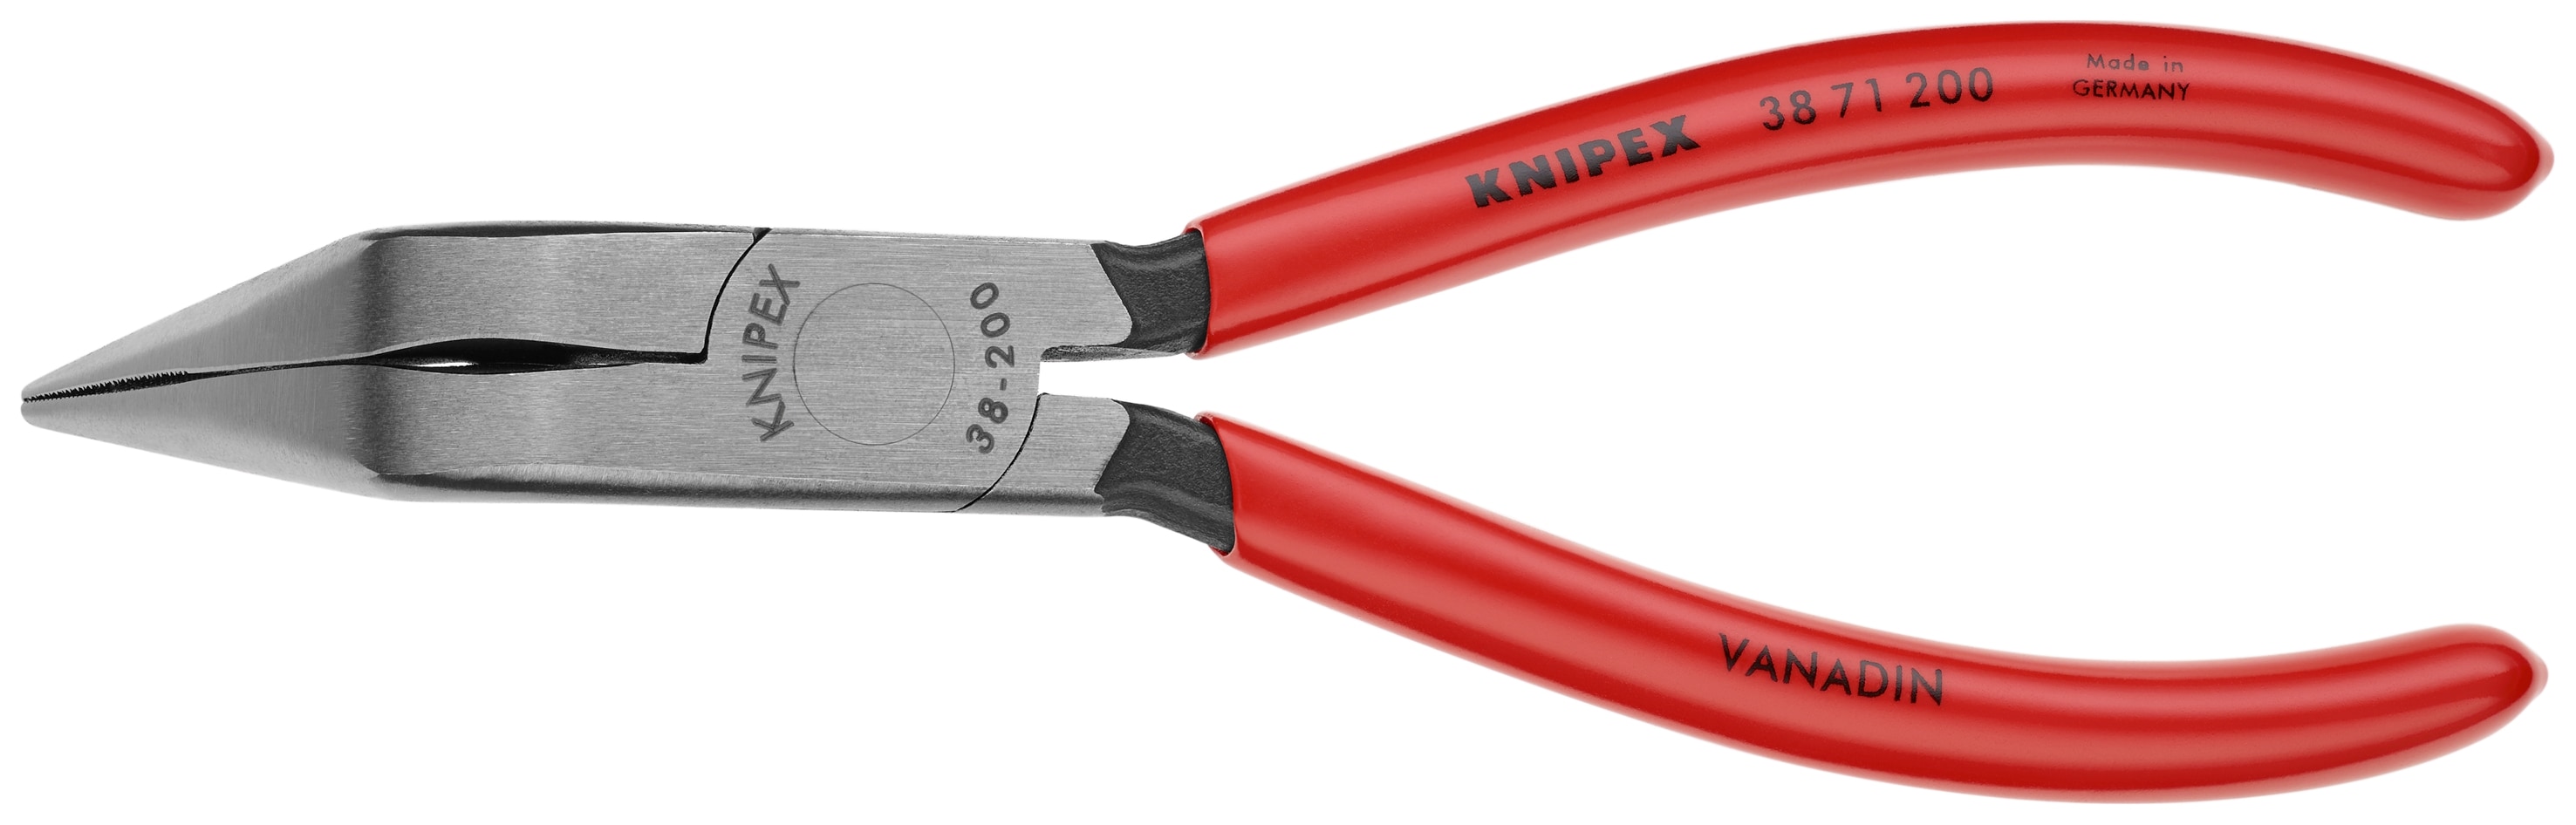 Buy Knipex 00 20 11 Workshop Pliers Set 3-piece